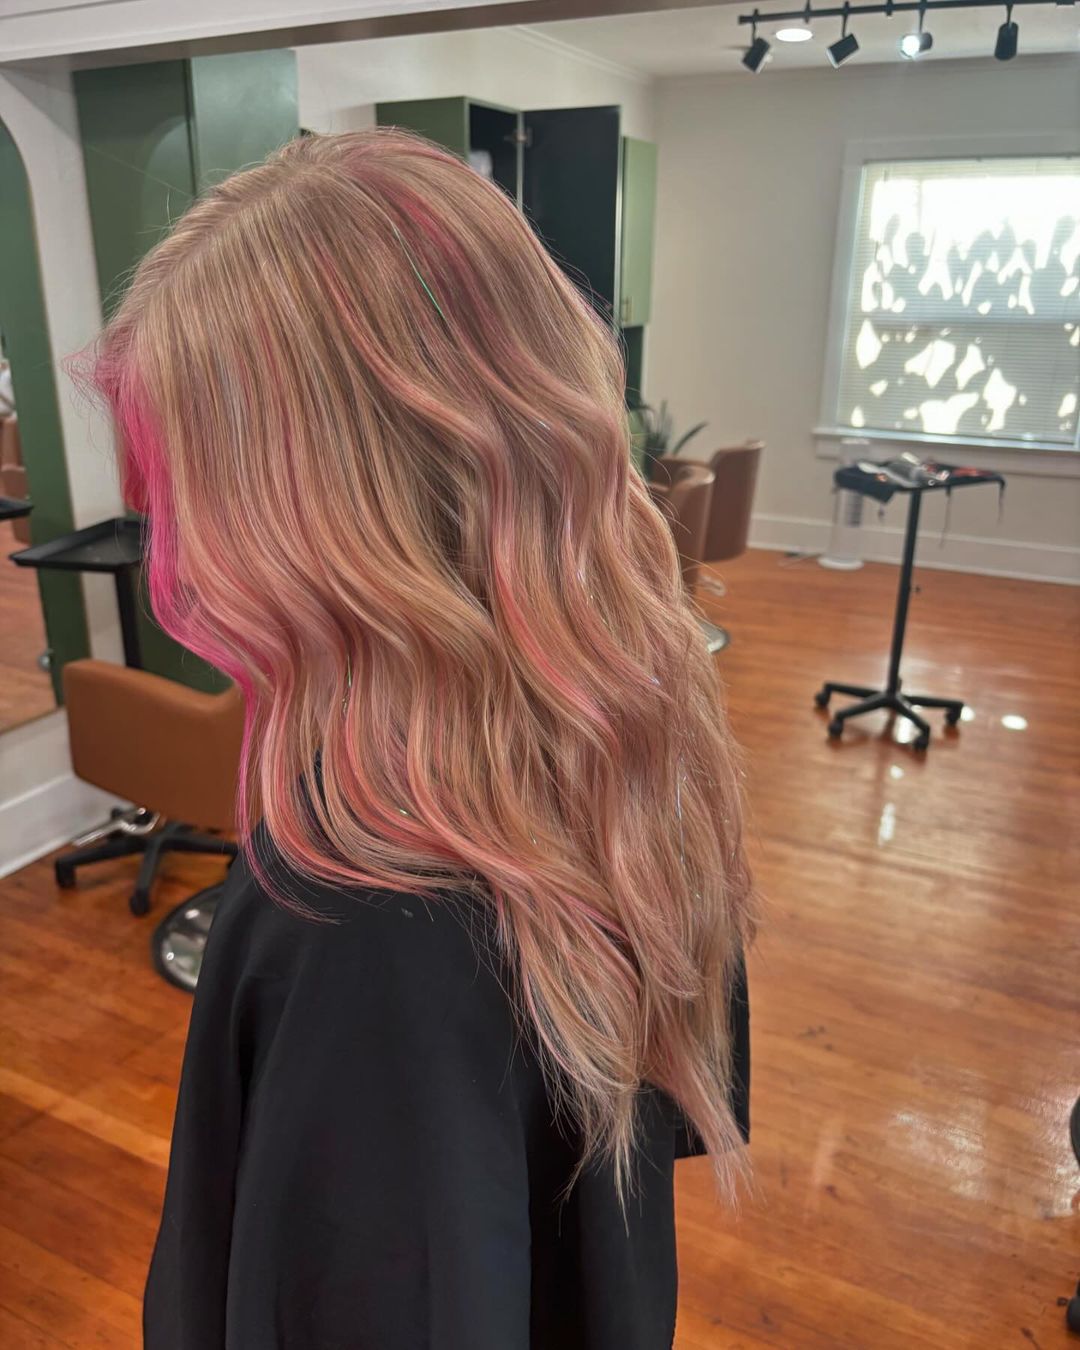 sottili riflessi rosa su capelli biondi